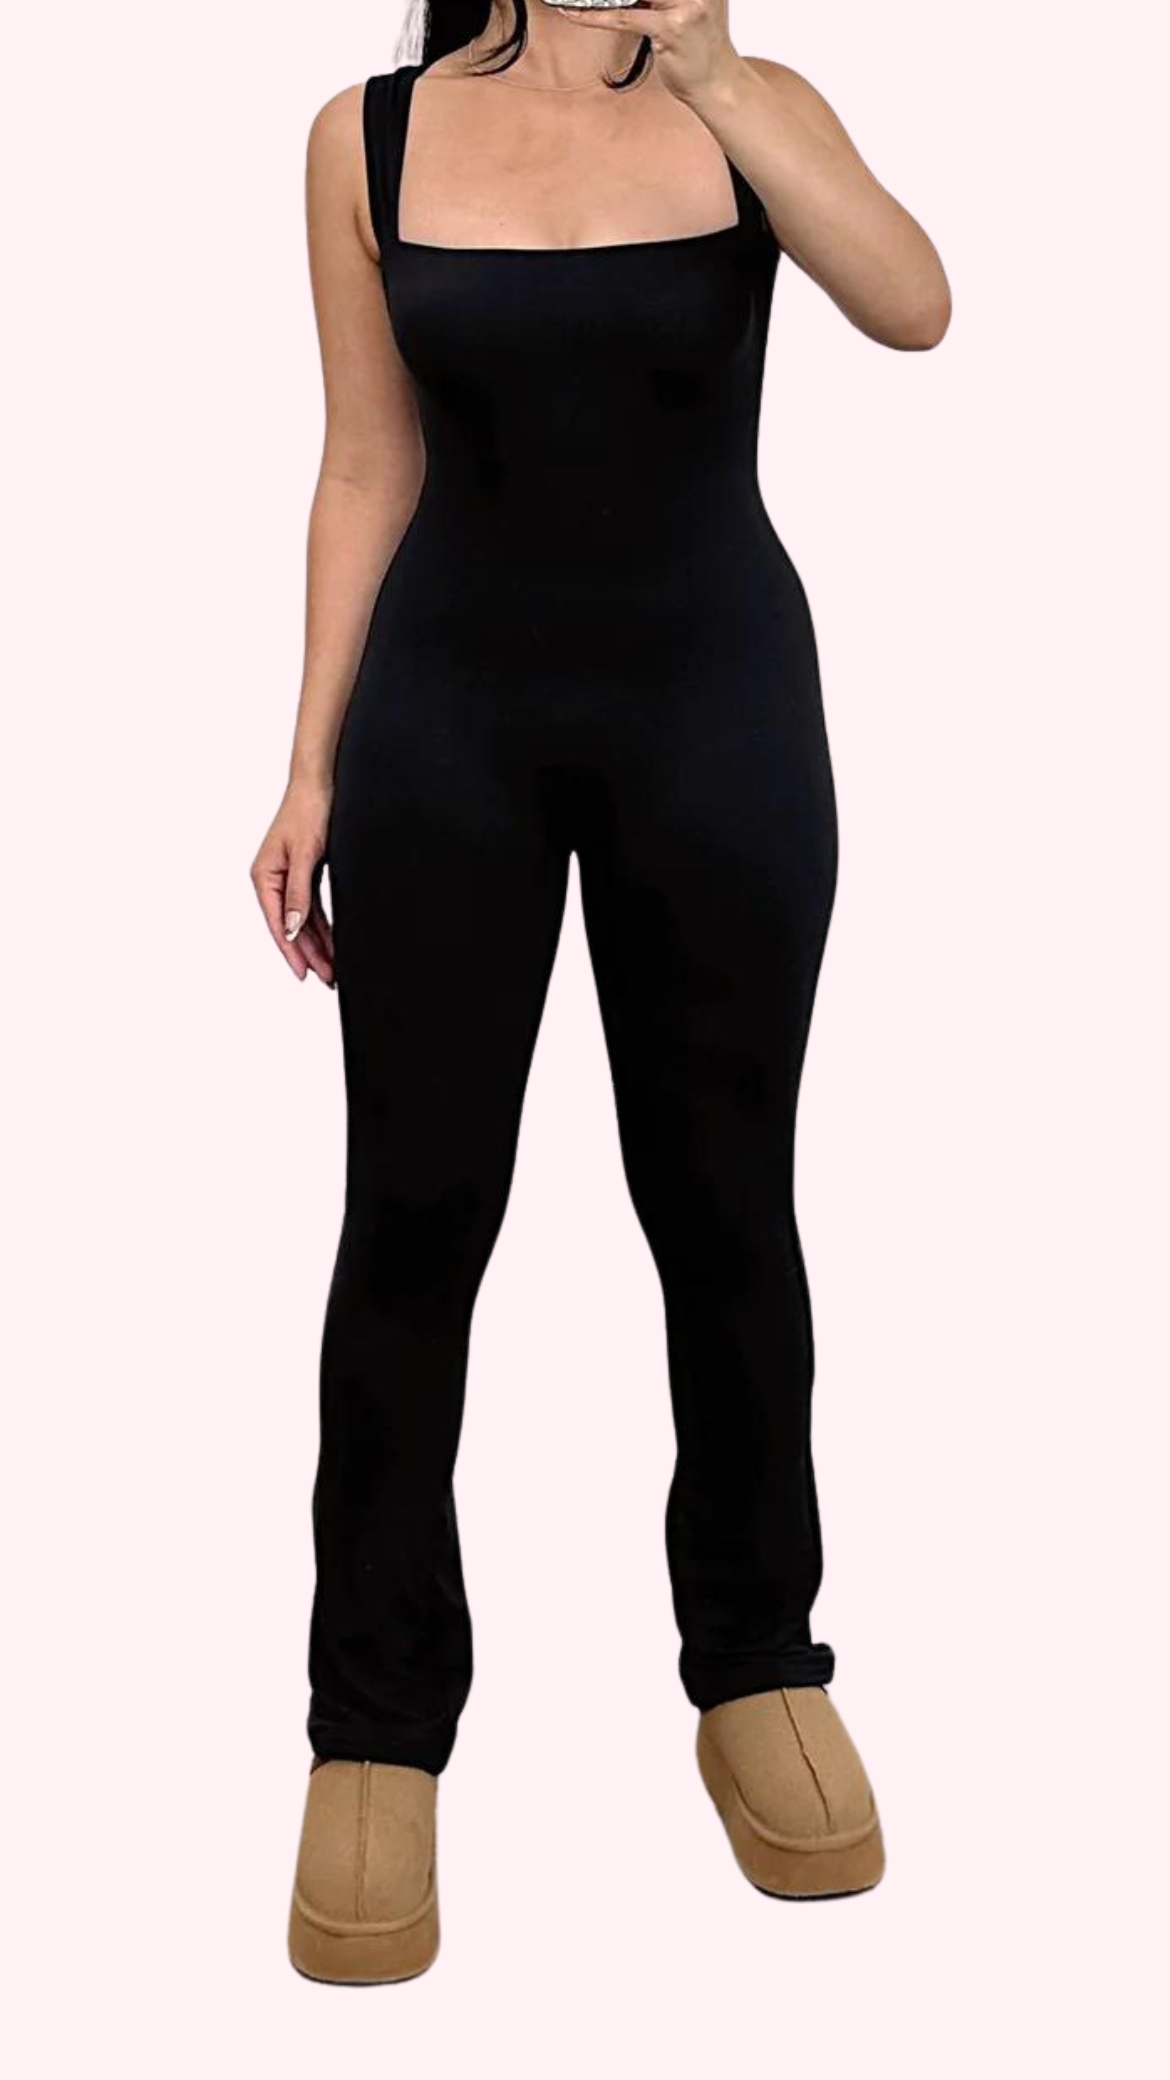 BLACK Sleeveless Jumpsuit Square Neckline Slip On/No Zipper Double Layered